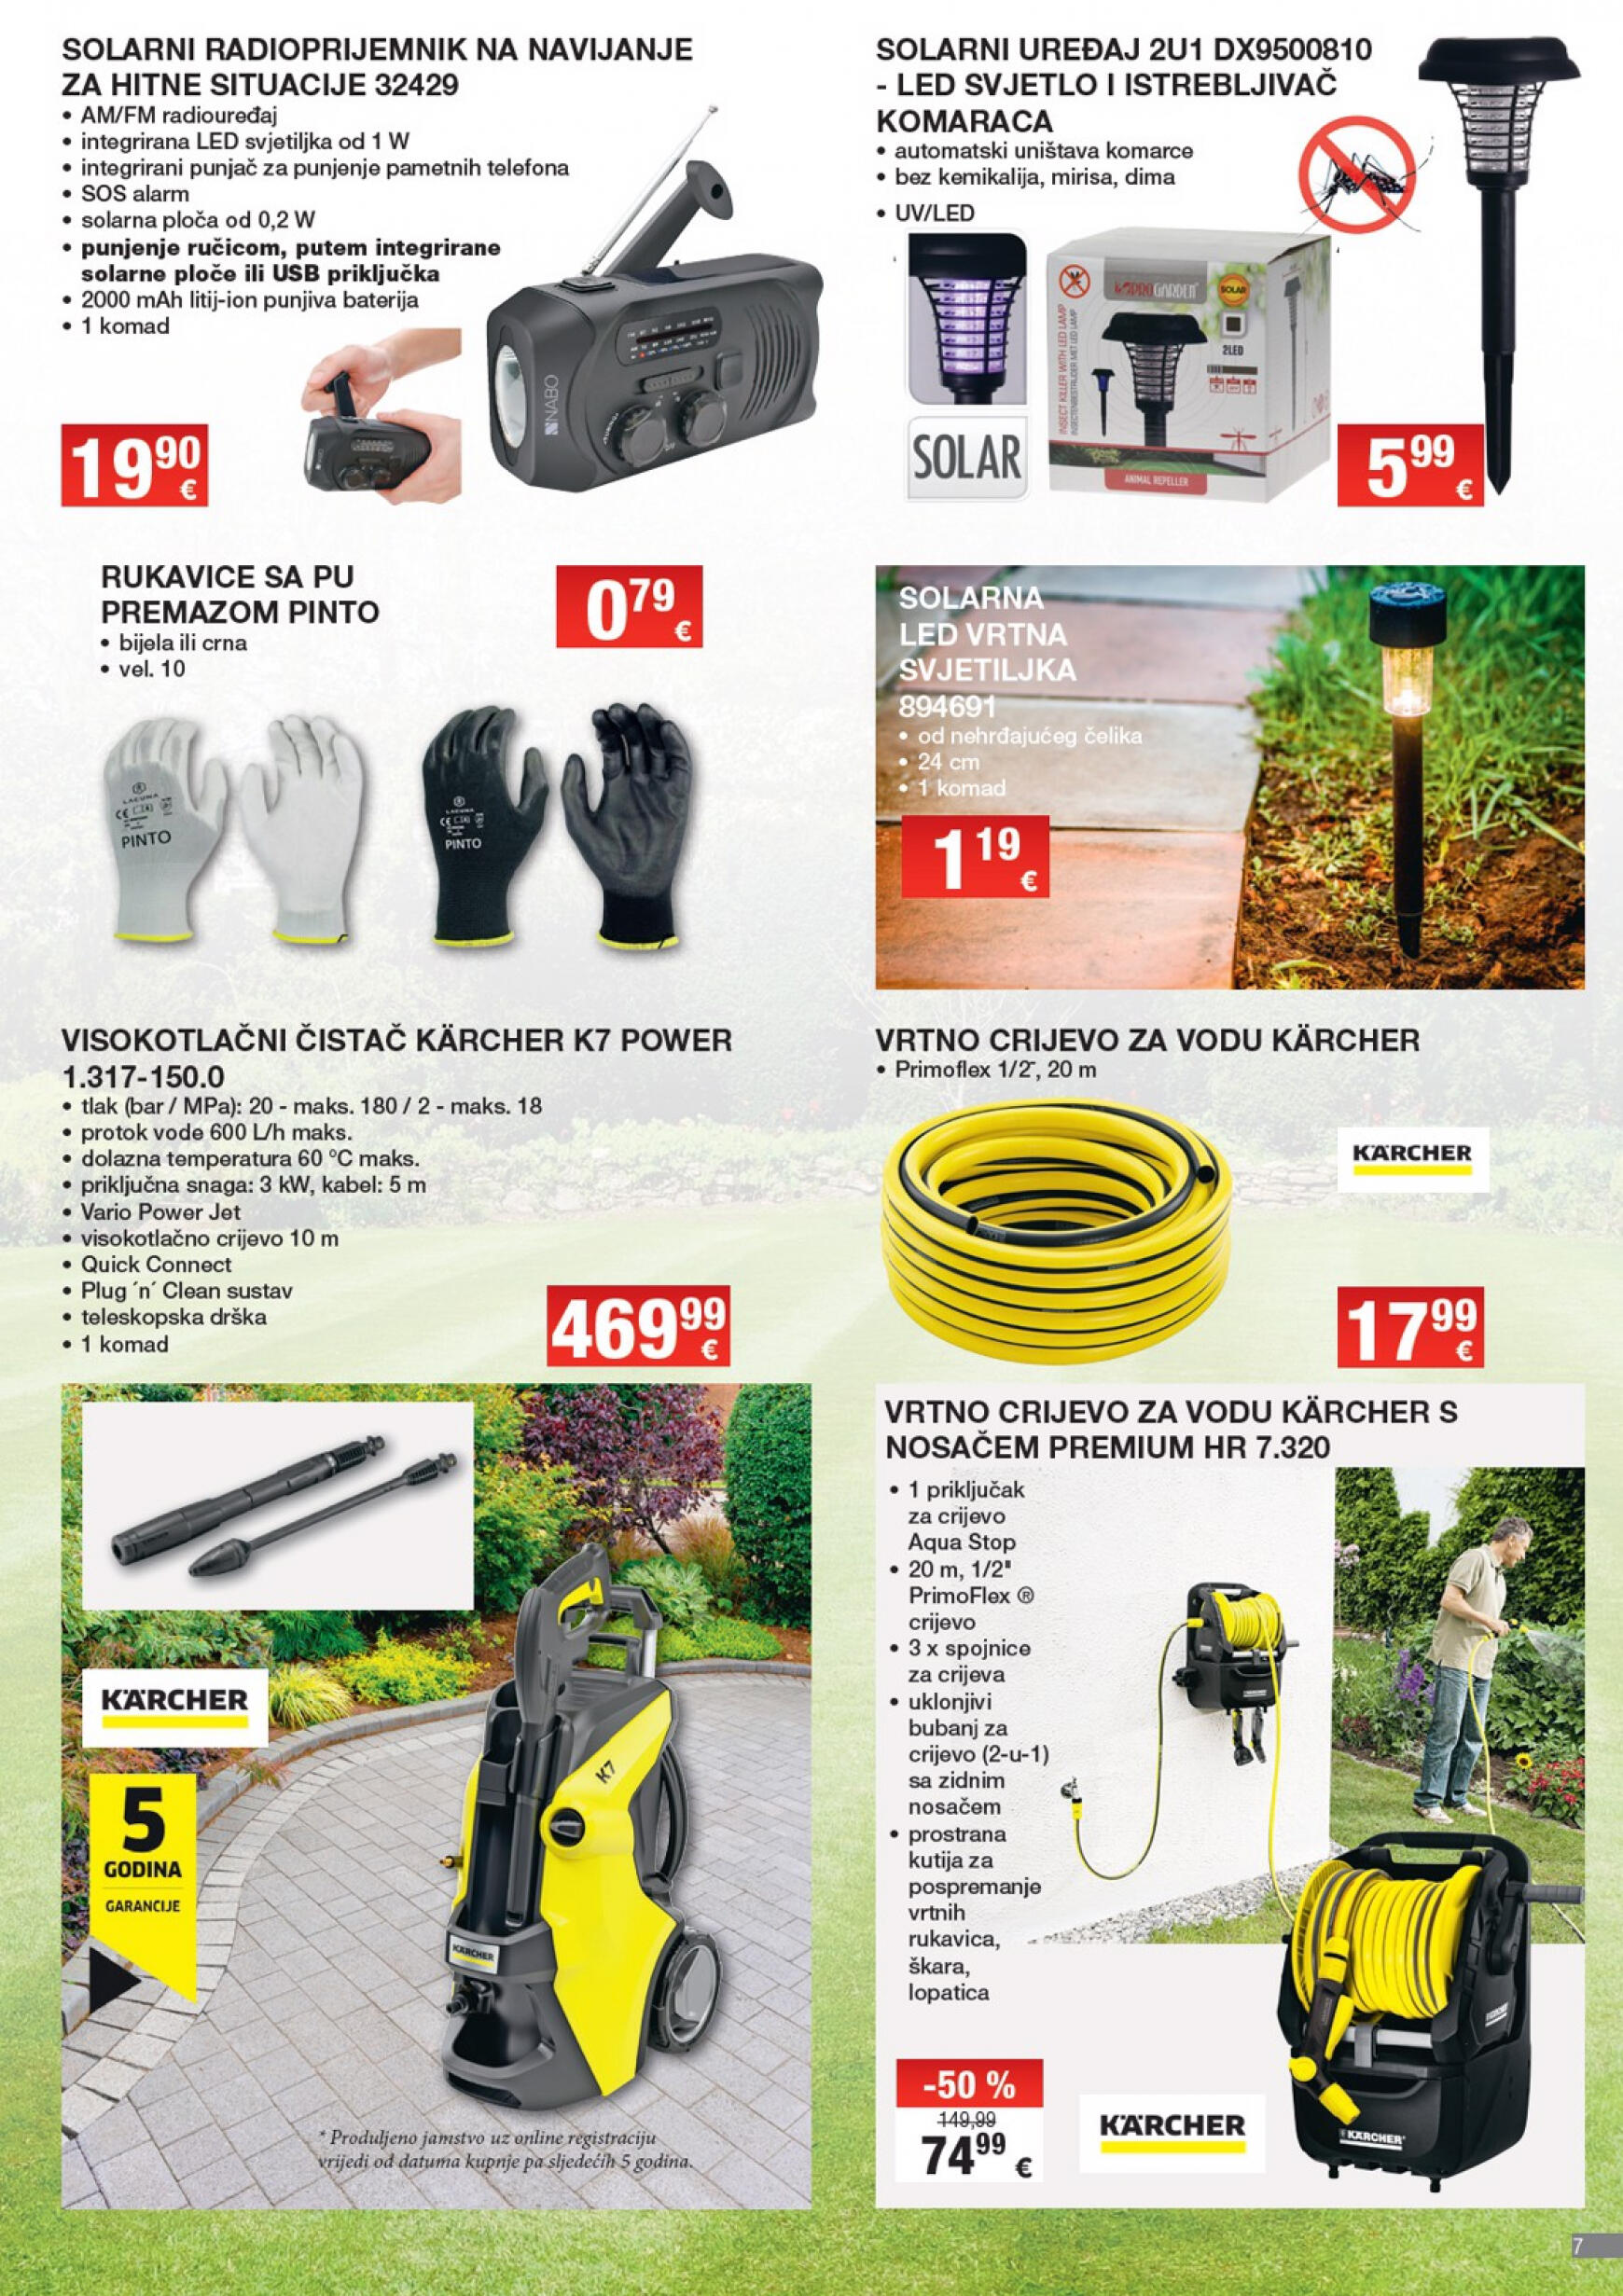 spar - Novi katalog INTERSPAR - Ze Tenutke Pod Suncem 08.05. - 11.06. - page: 7